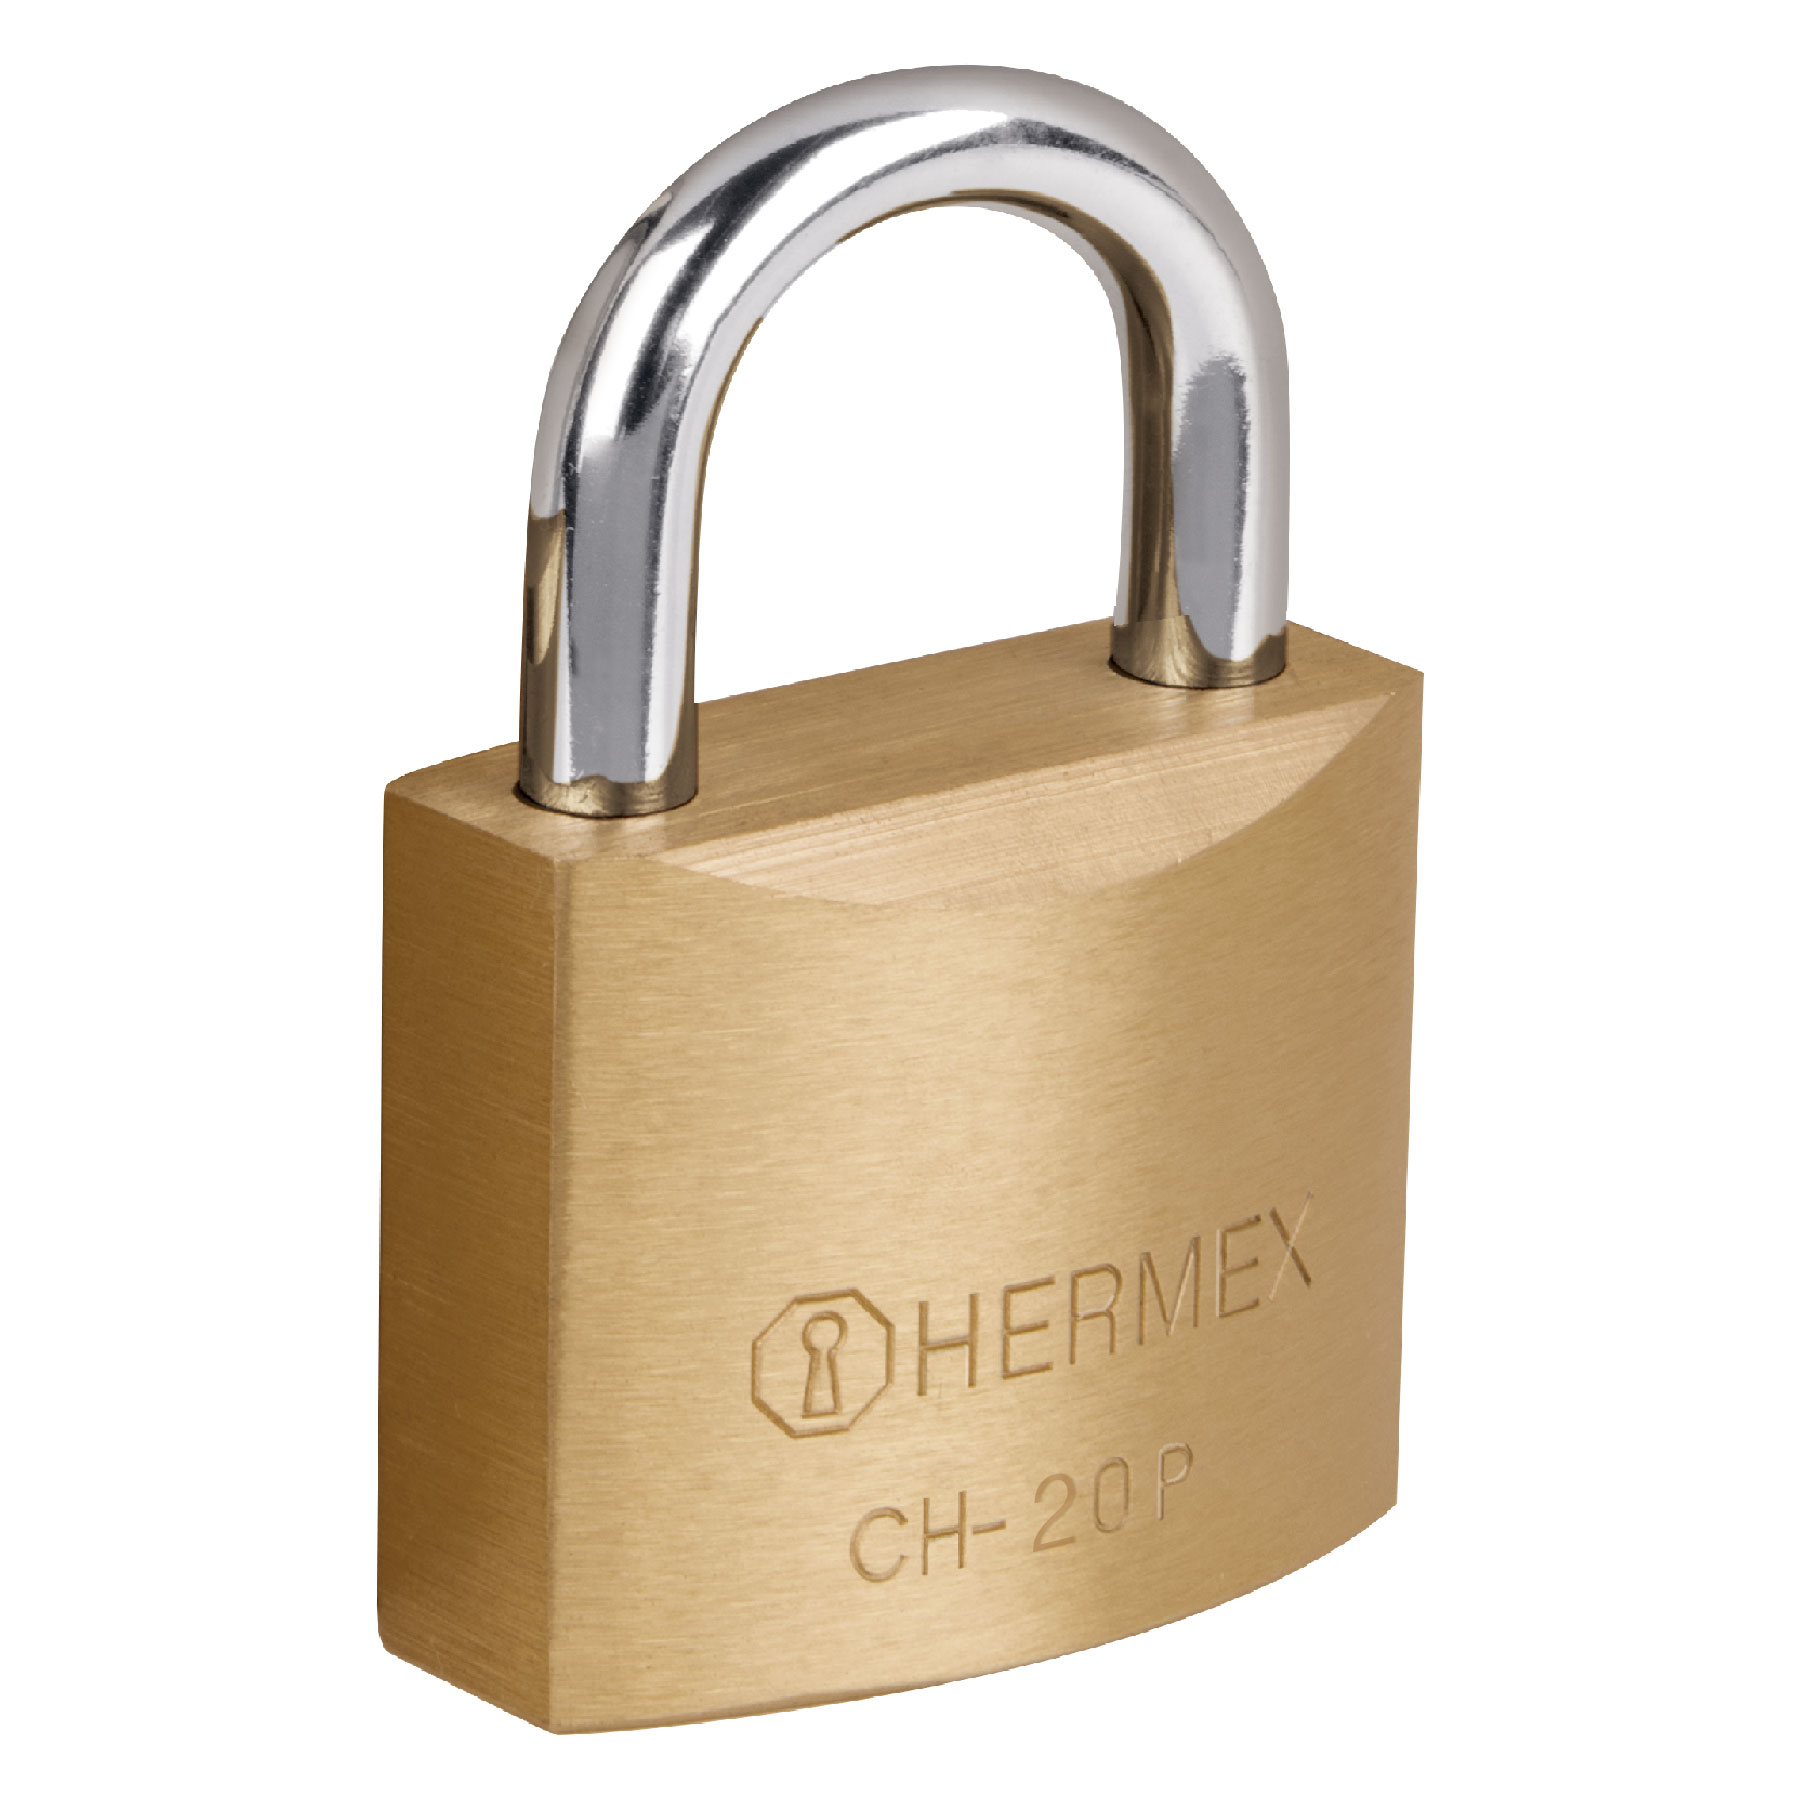  Hermex Brass Plated Iron Padlocks Standard Key in Blister